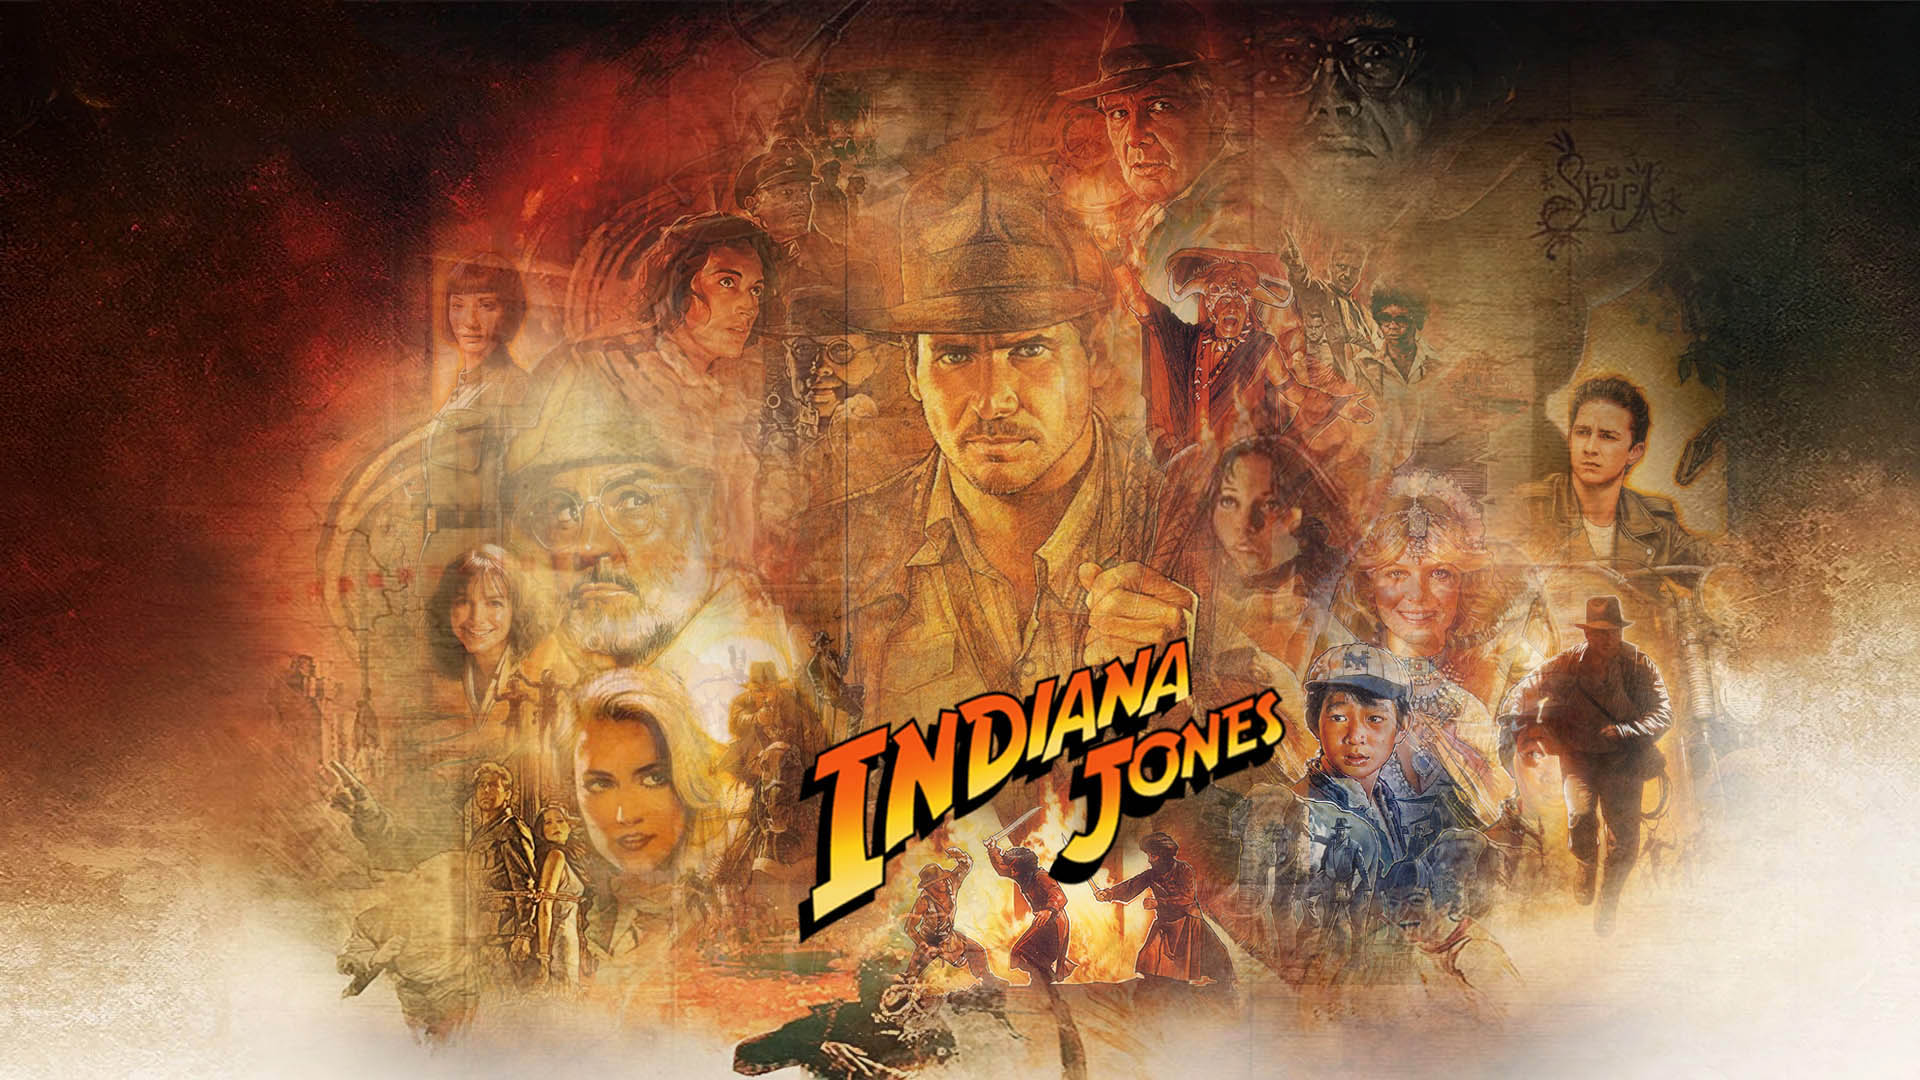 Indiana Jones Wallpaper by Thekingblader995 on DeviantArt